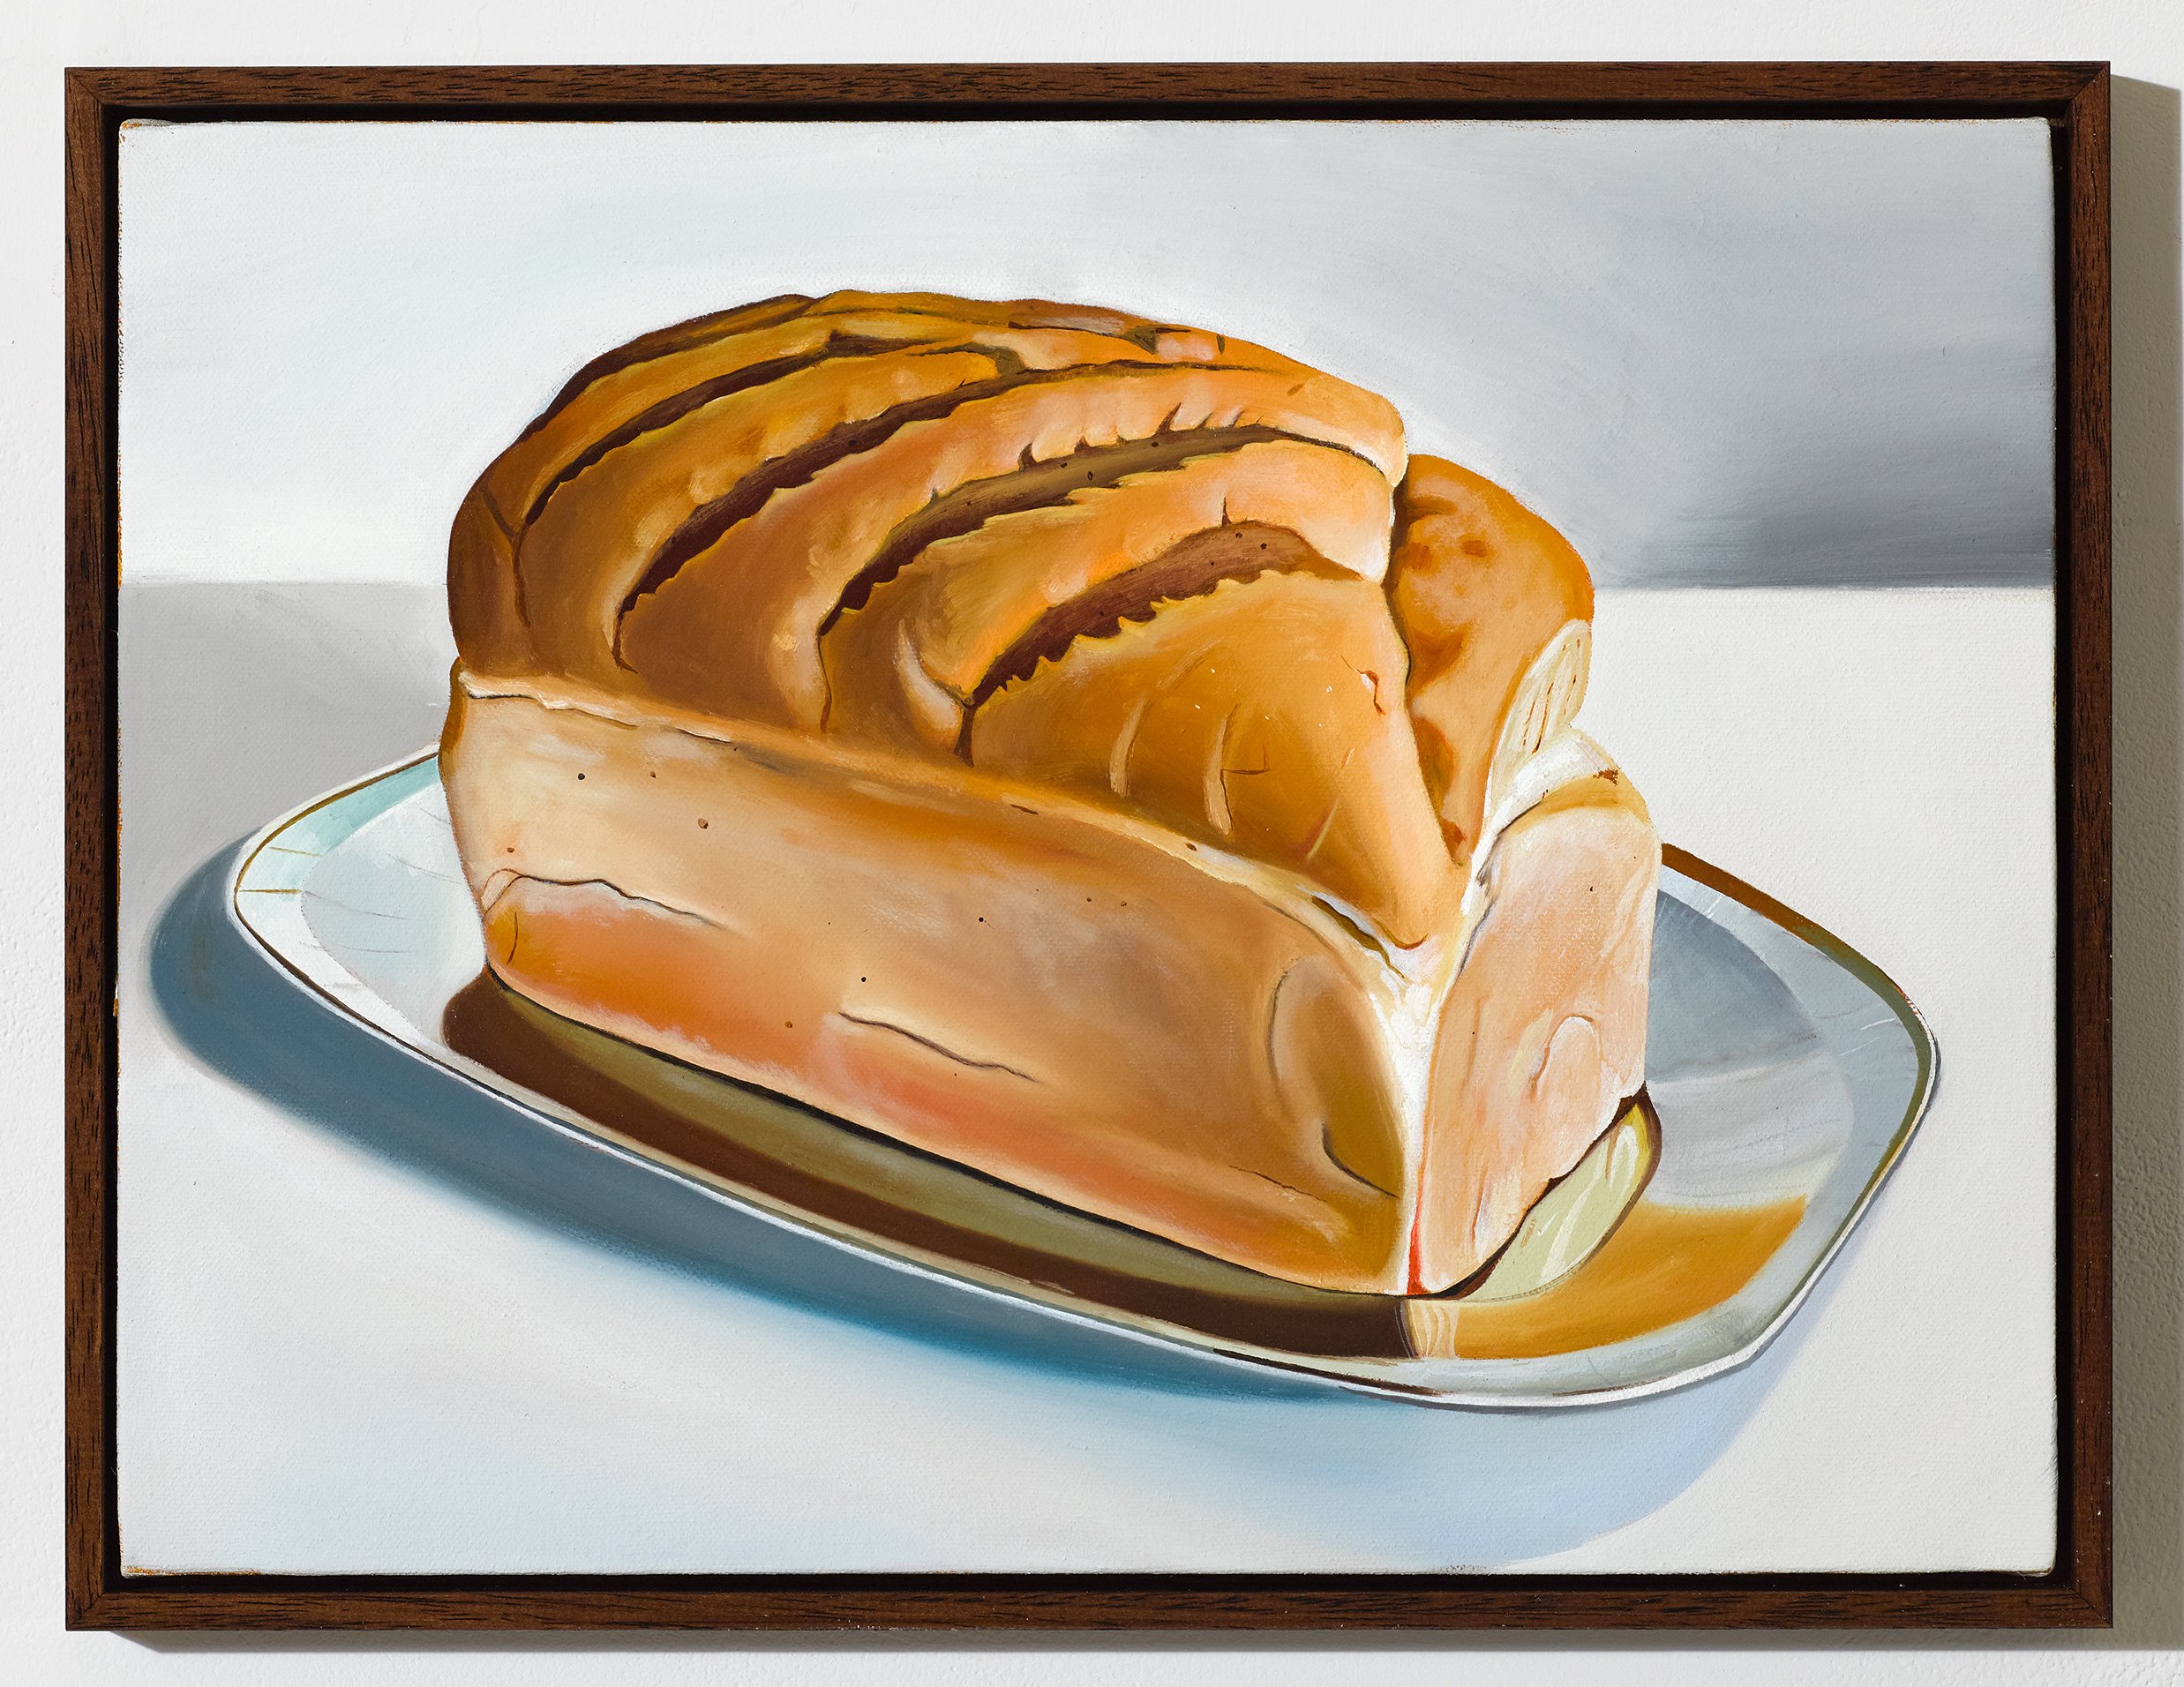  The Bread (2022)  Oil on canvas  30 x 40cm  Walnut tray frame  Available 